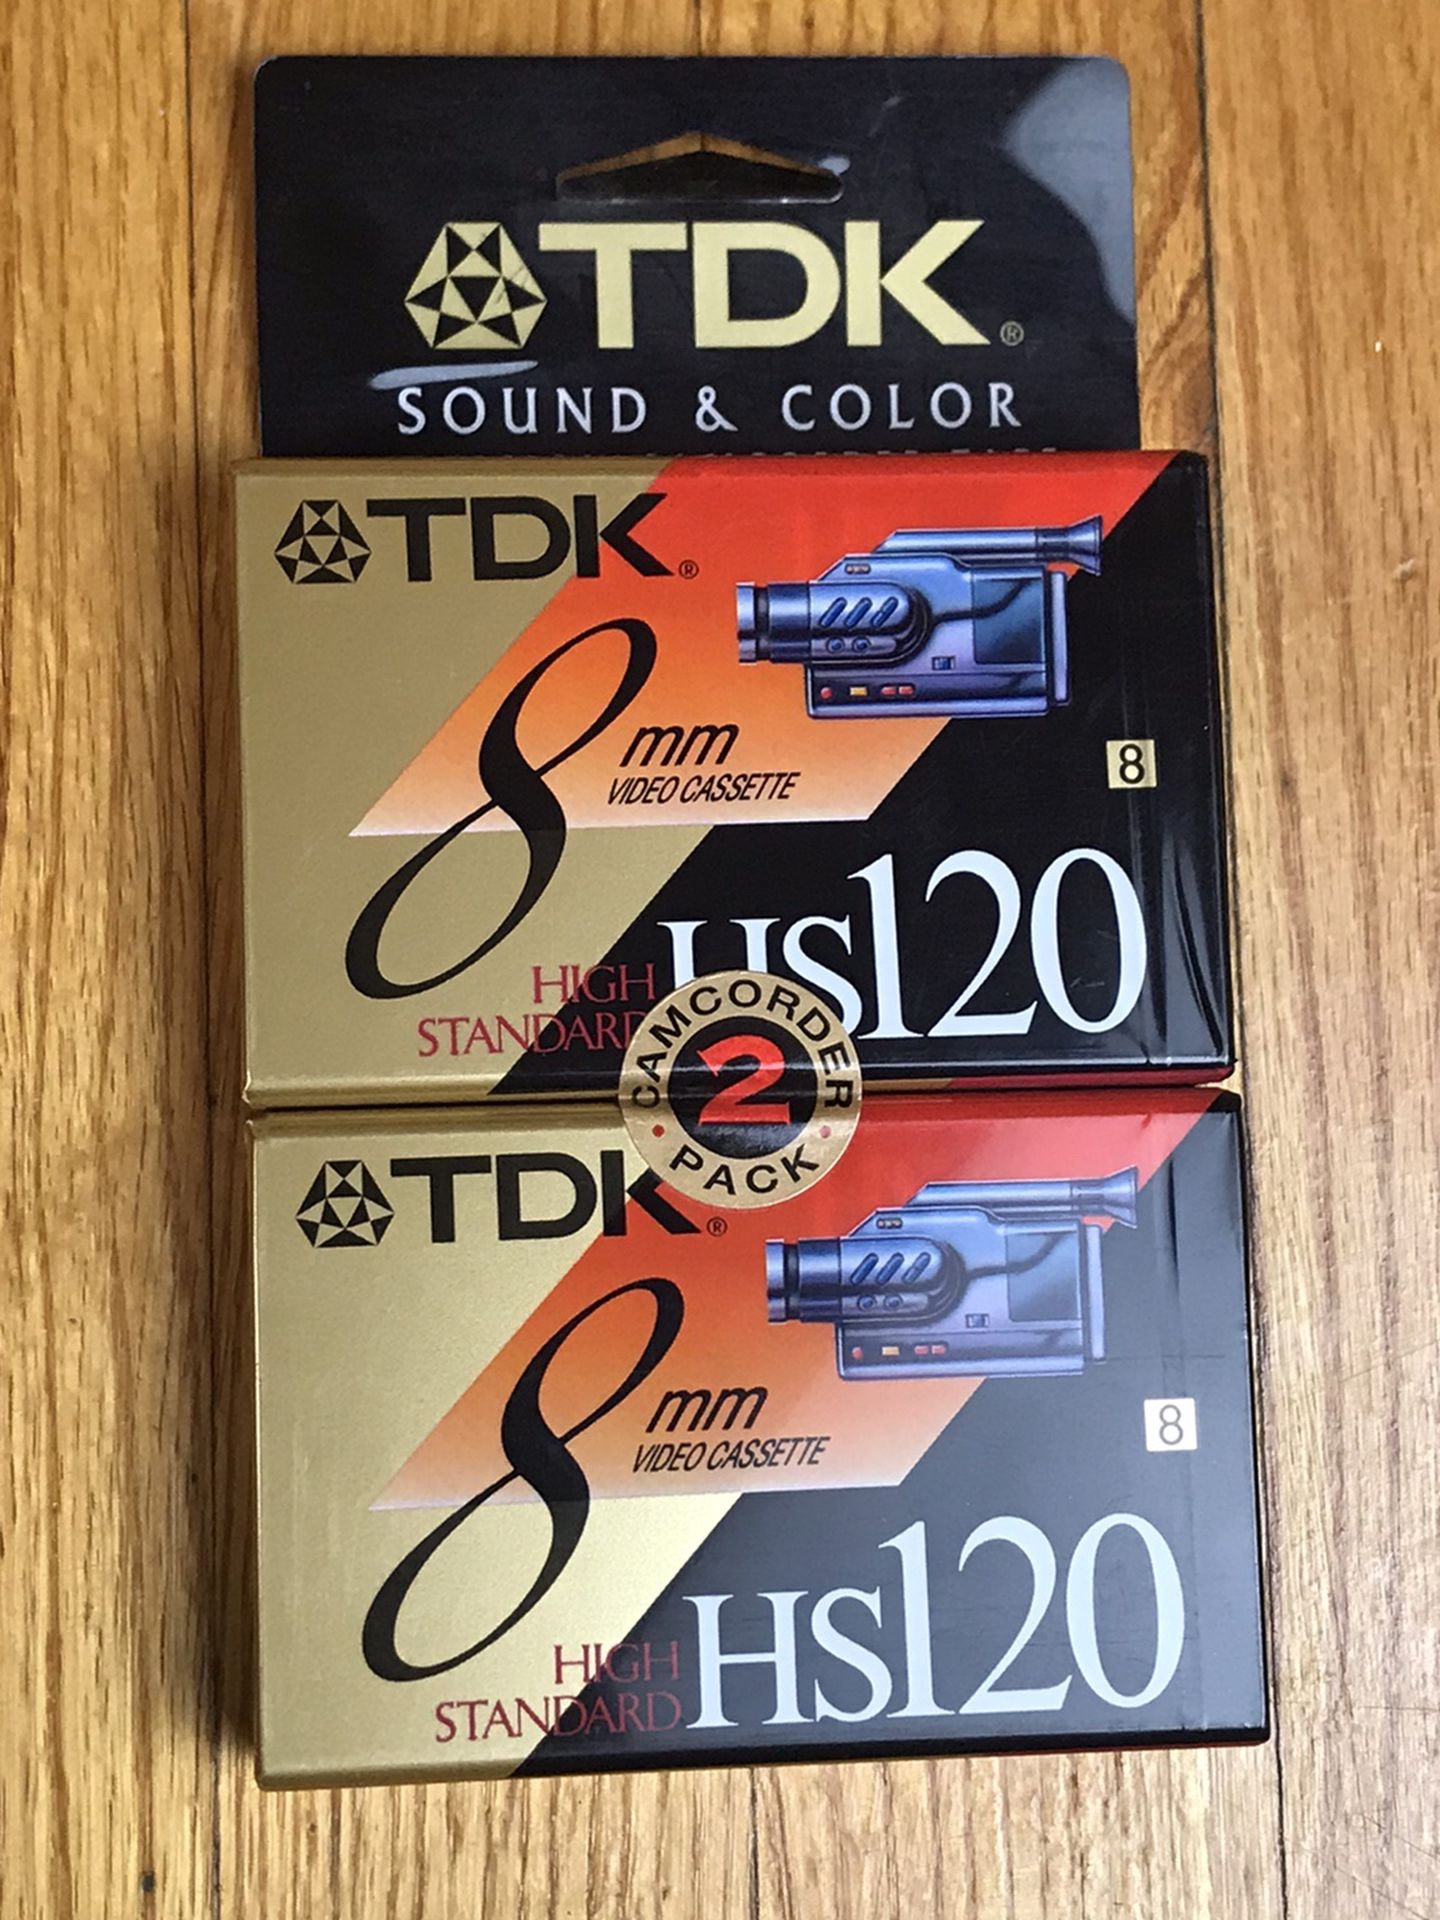 TDK 8mm Video Cassette HS 120 6 Pack